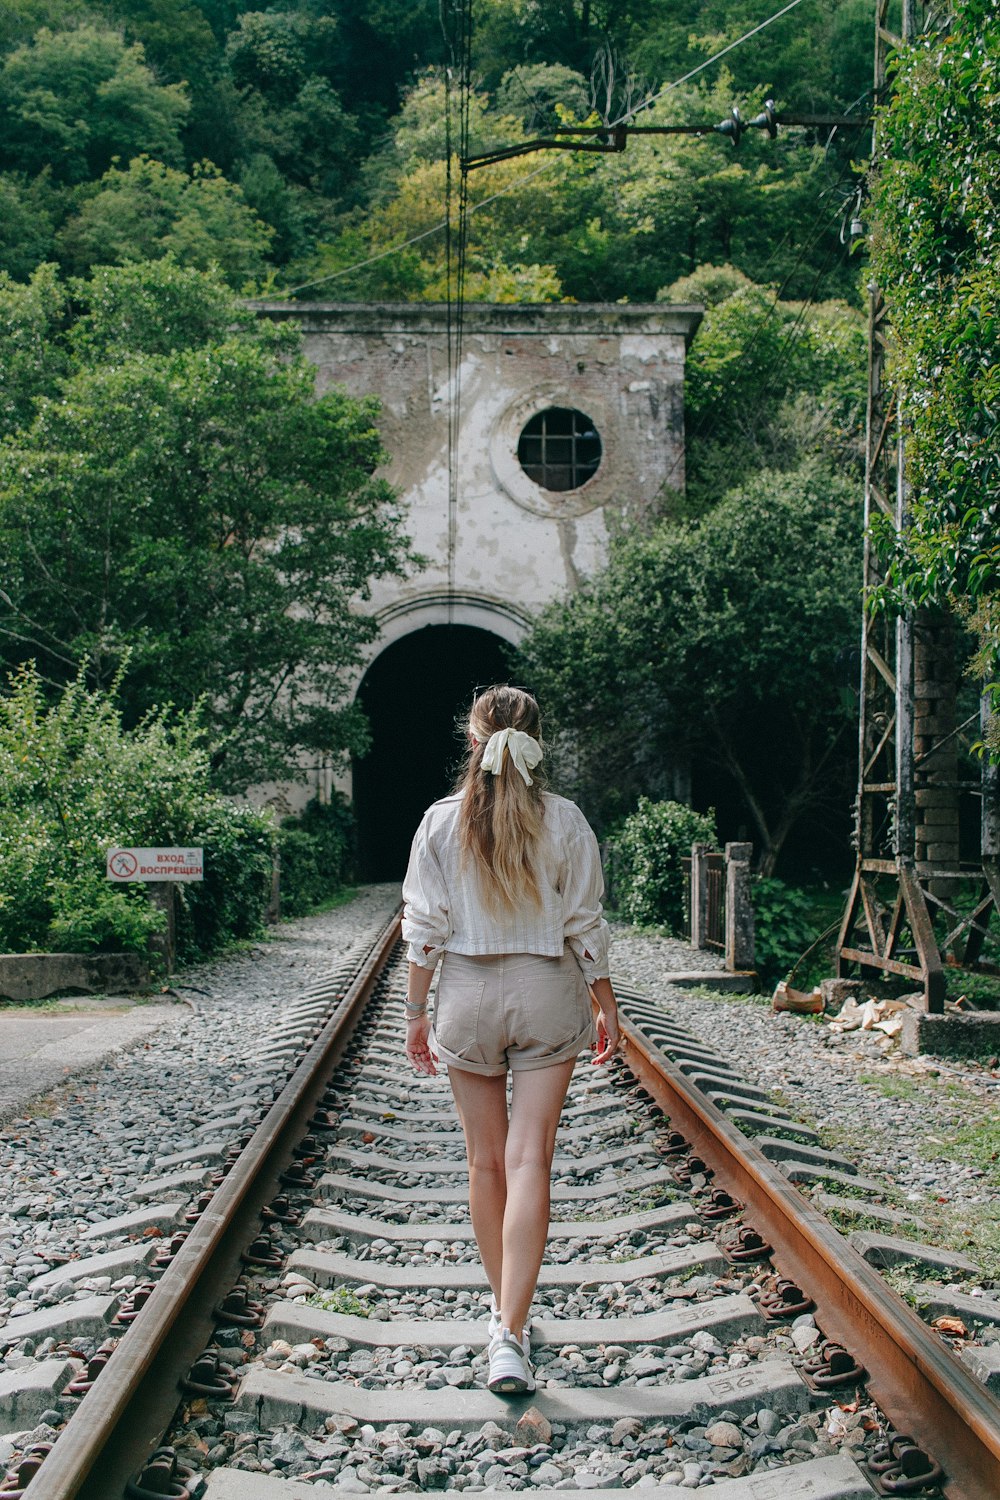 a person walking on train tracks